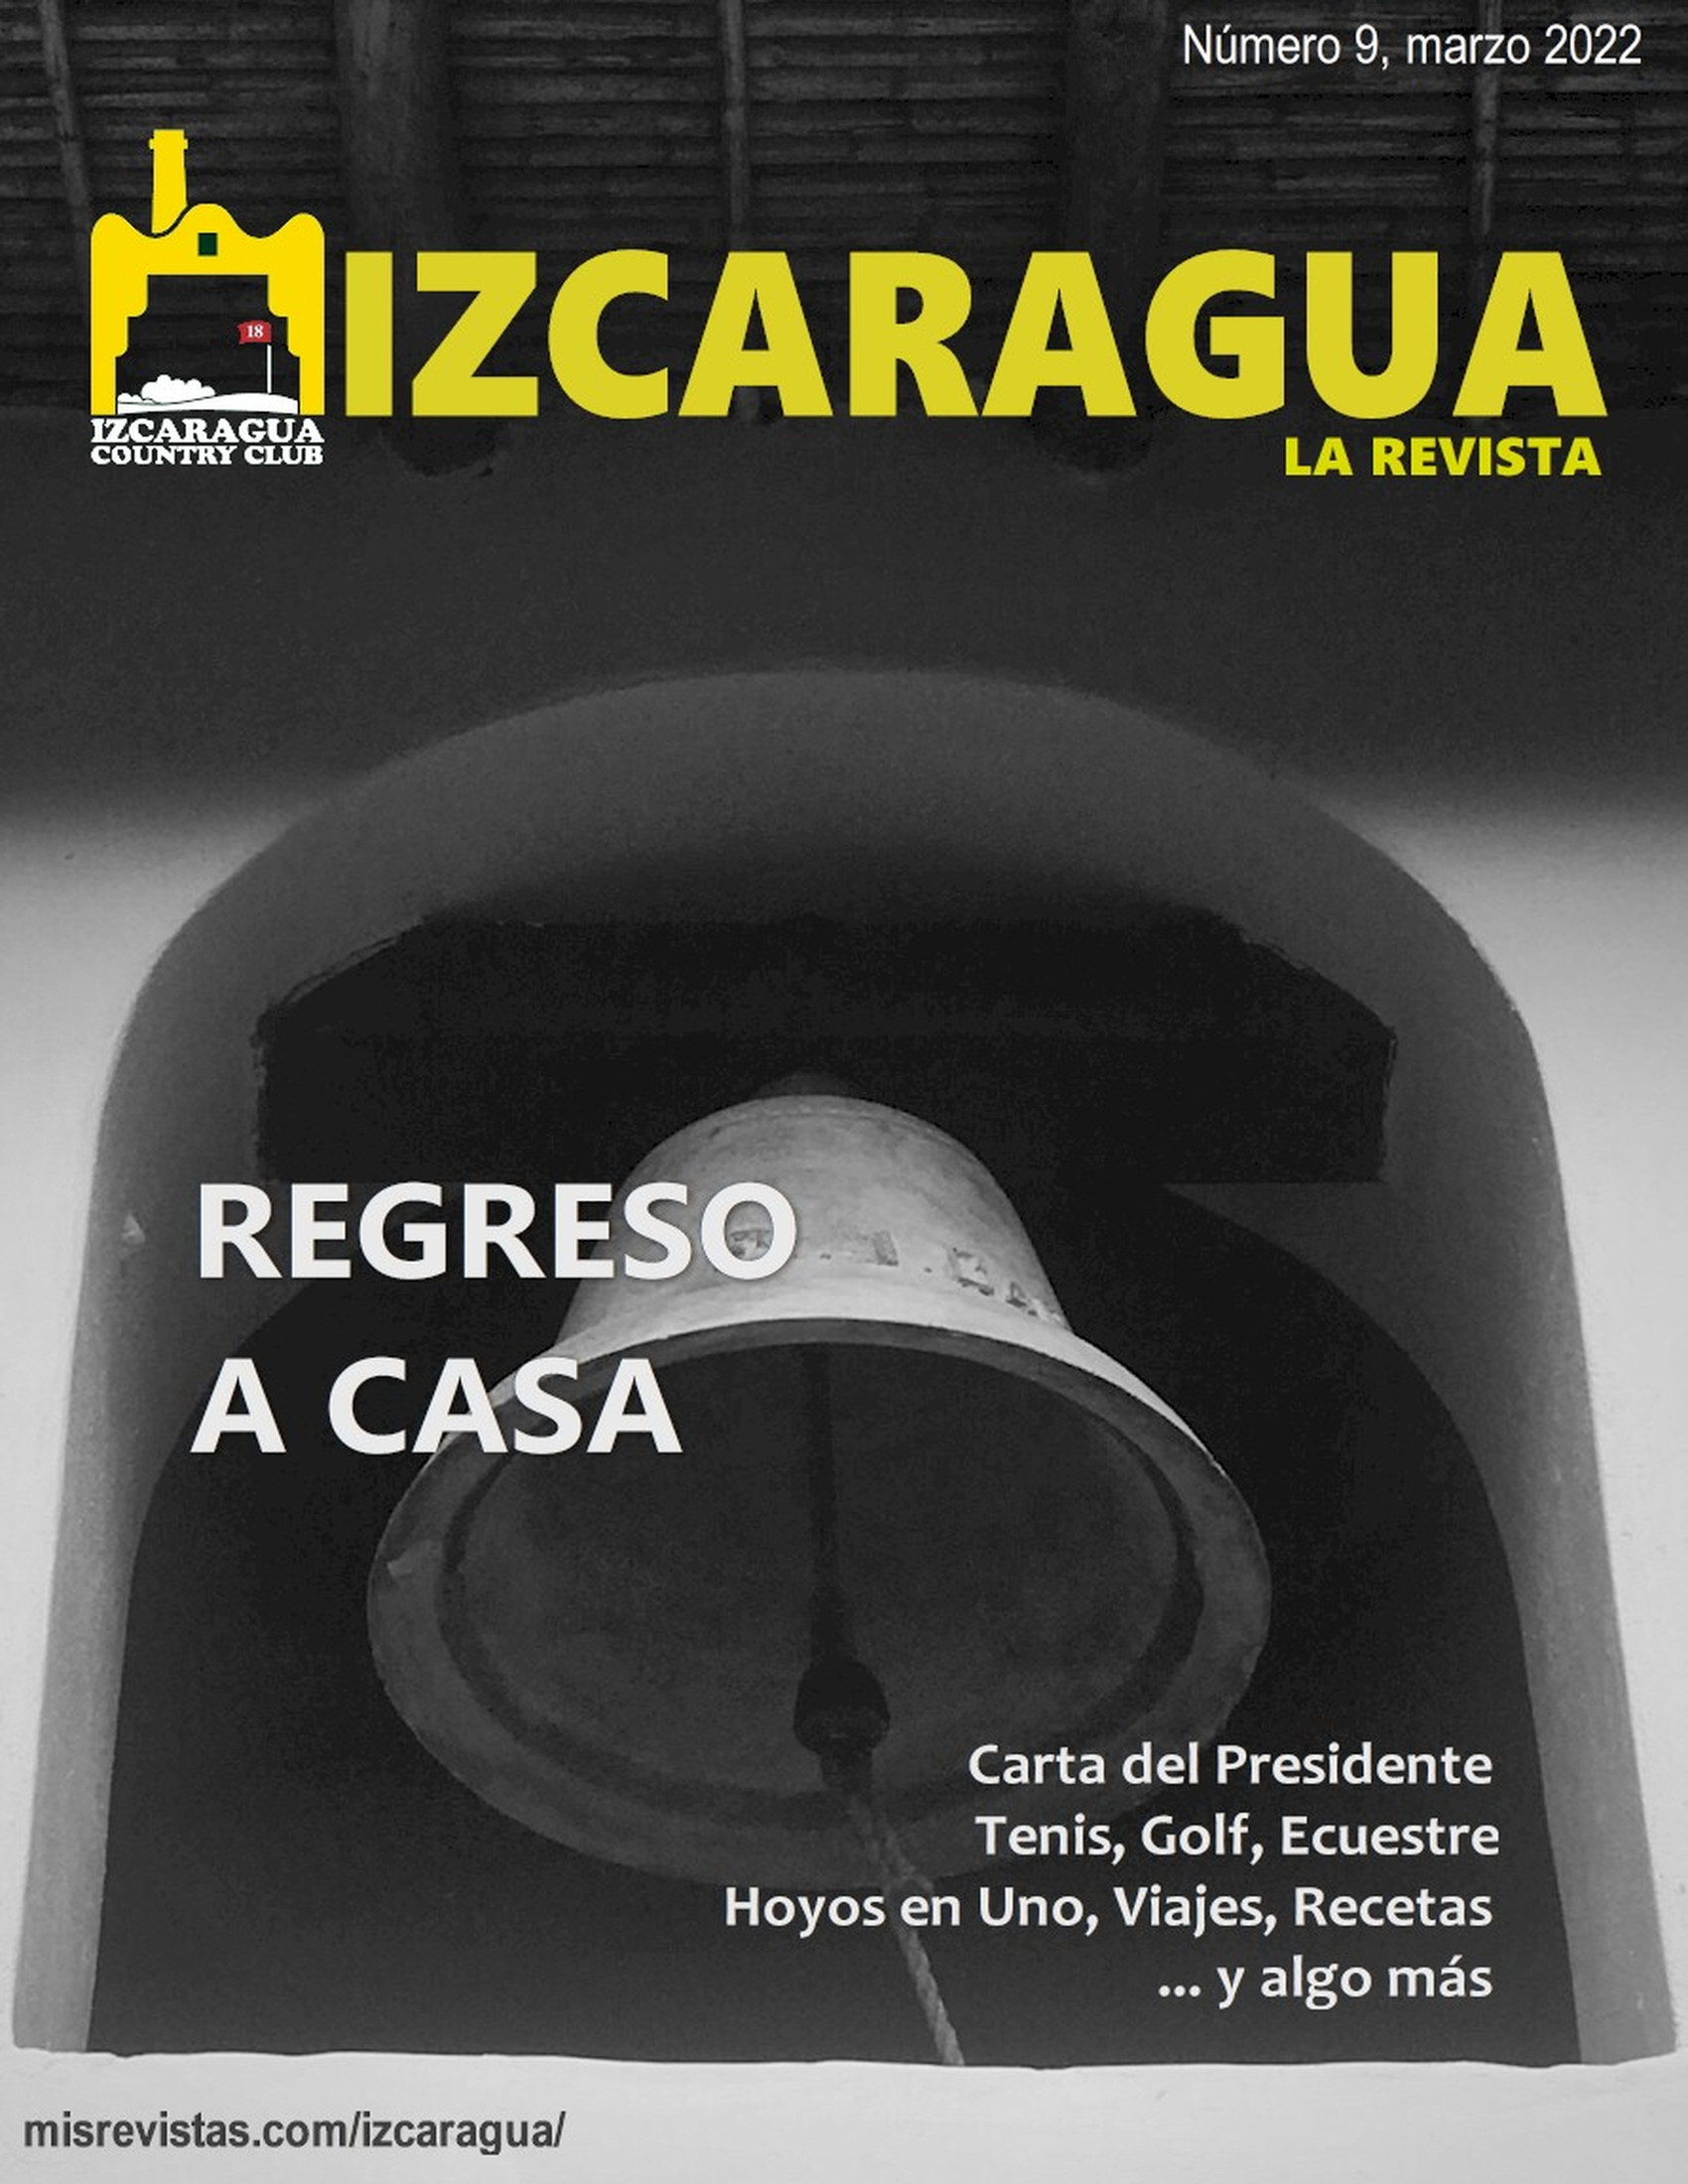 IZQ Izcaragua Country Club 2022 03 22